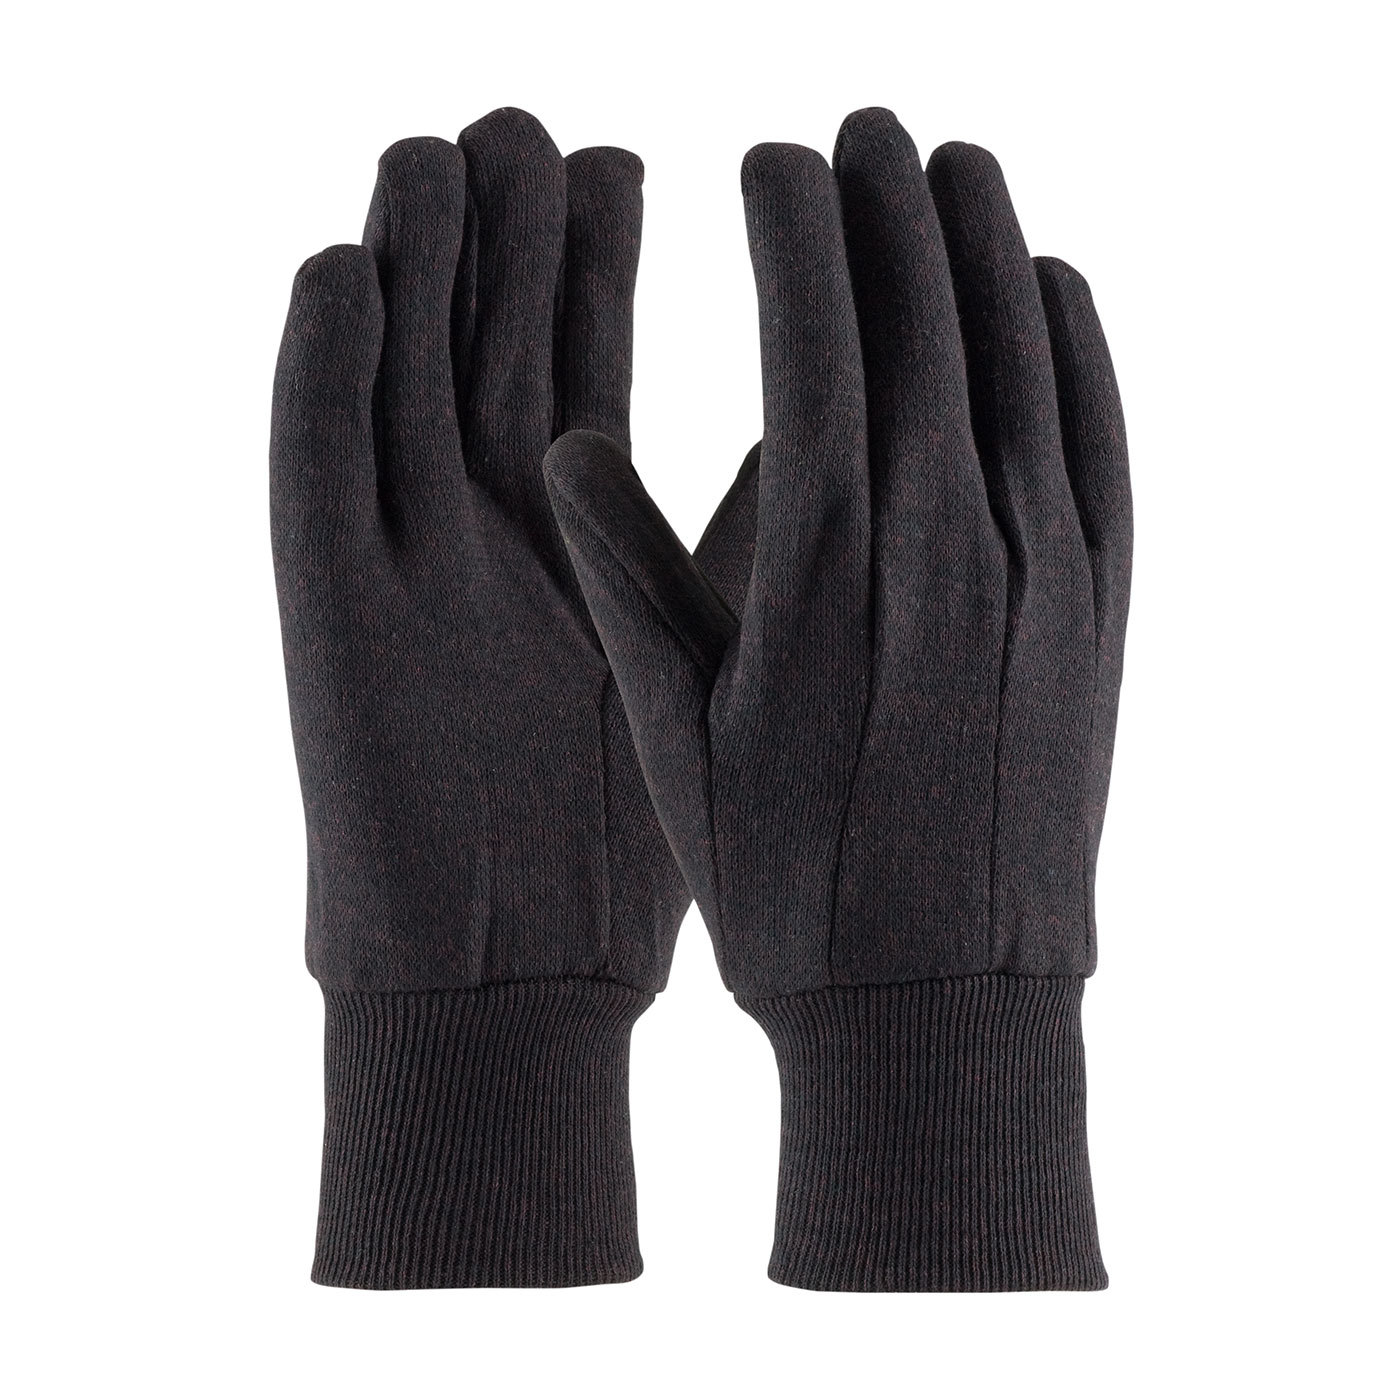 95-808 Regular Weight Polyester/Cotton Jersey Glove - Men's PID-95 808